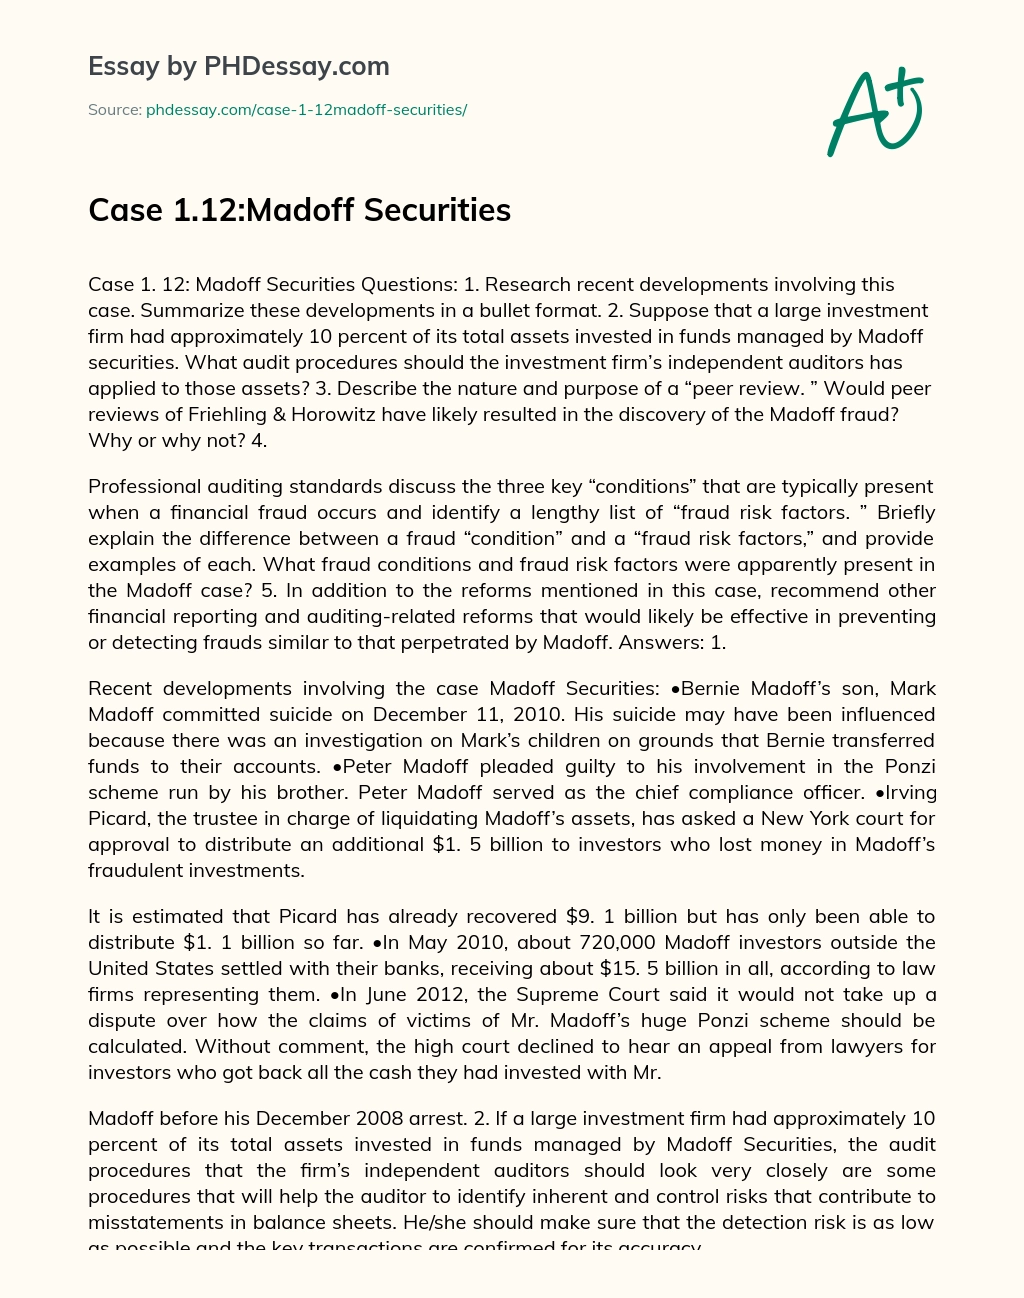 Case 1.12:Madoff Securities essay